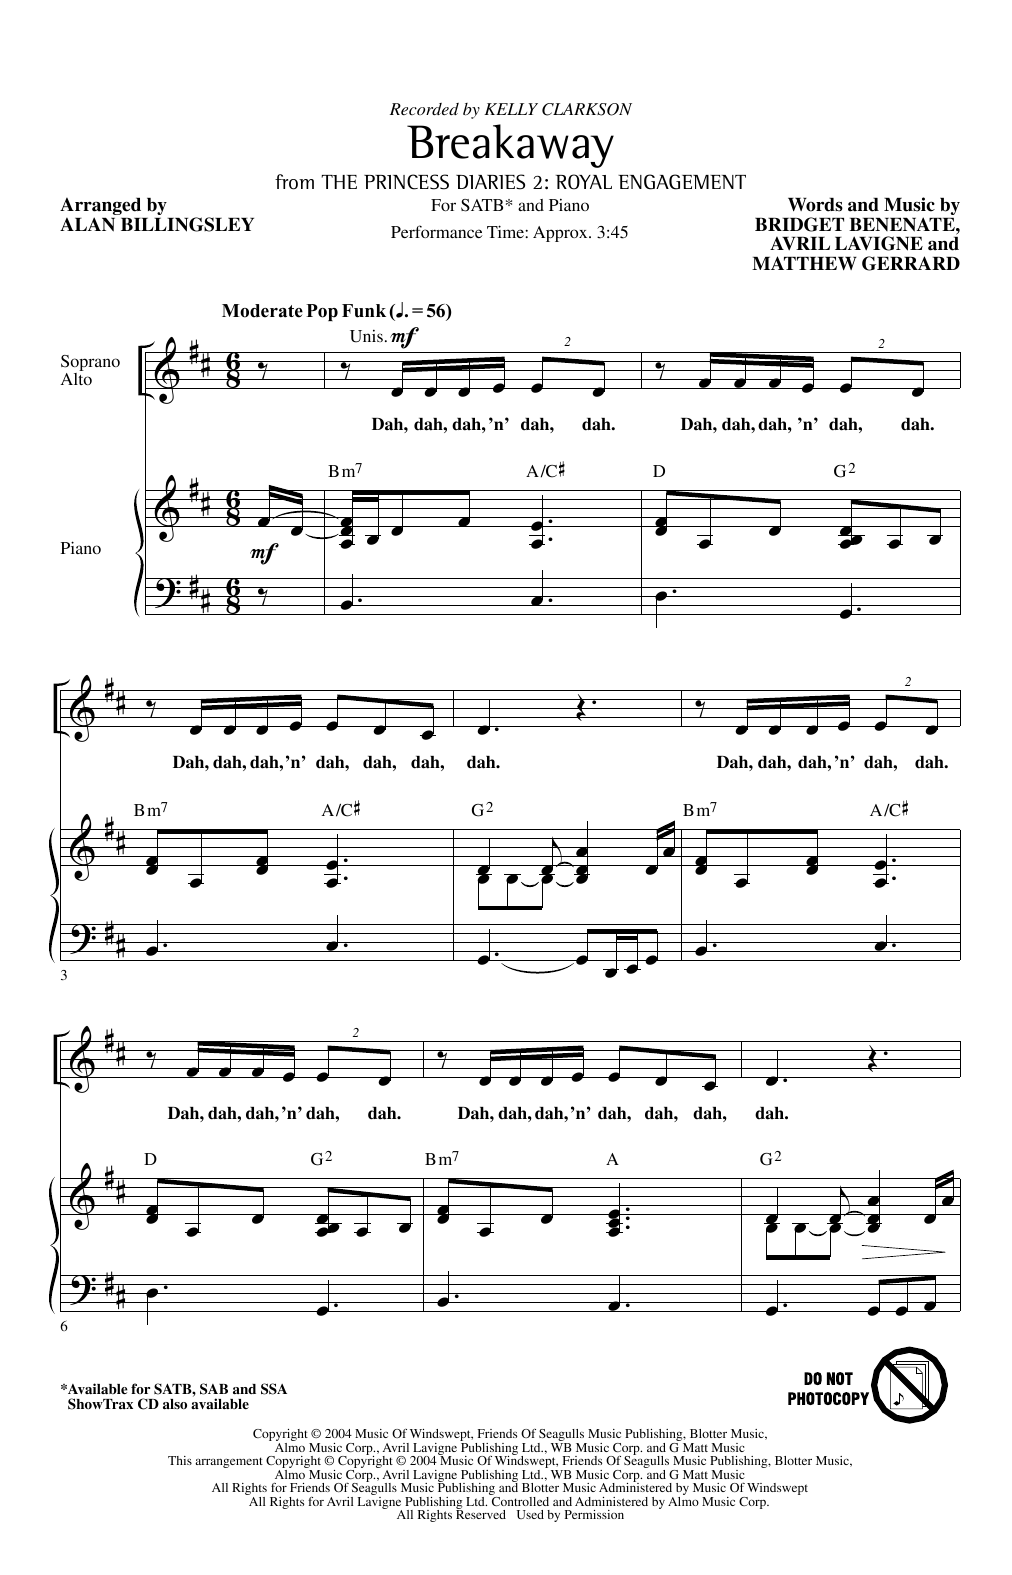 Kelly Clarkson Breakaway (arr. Alan Billingsley) Sheet Music Notes & Chords for SAB Choir - Download or Print PDF